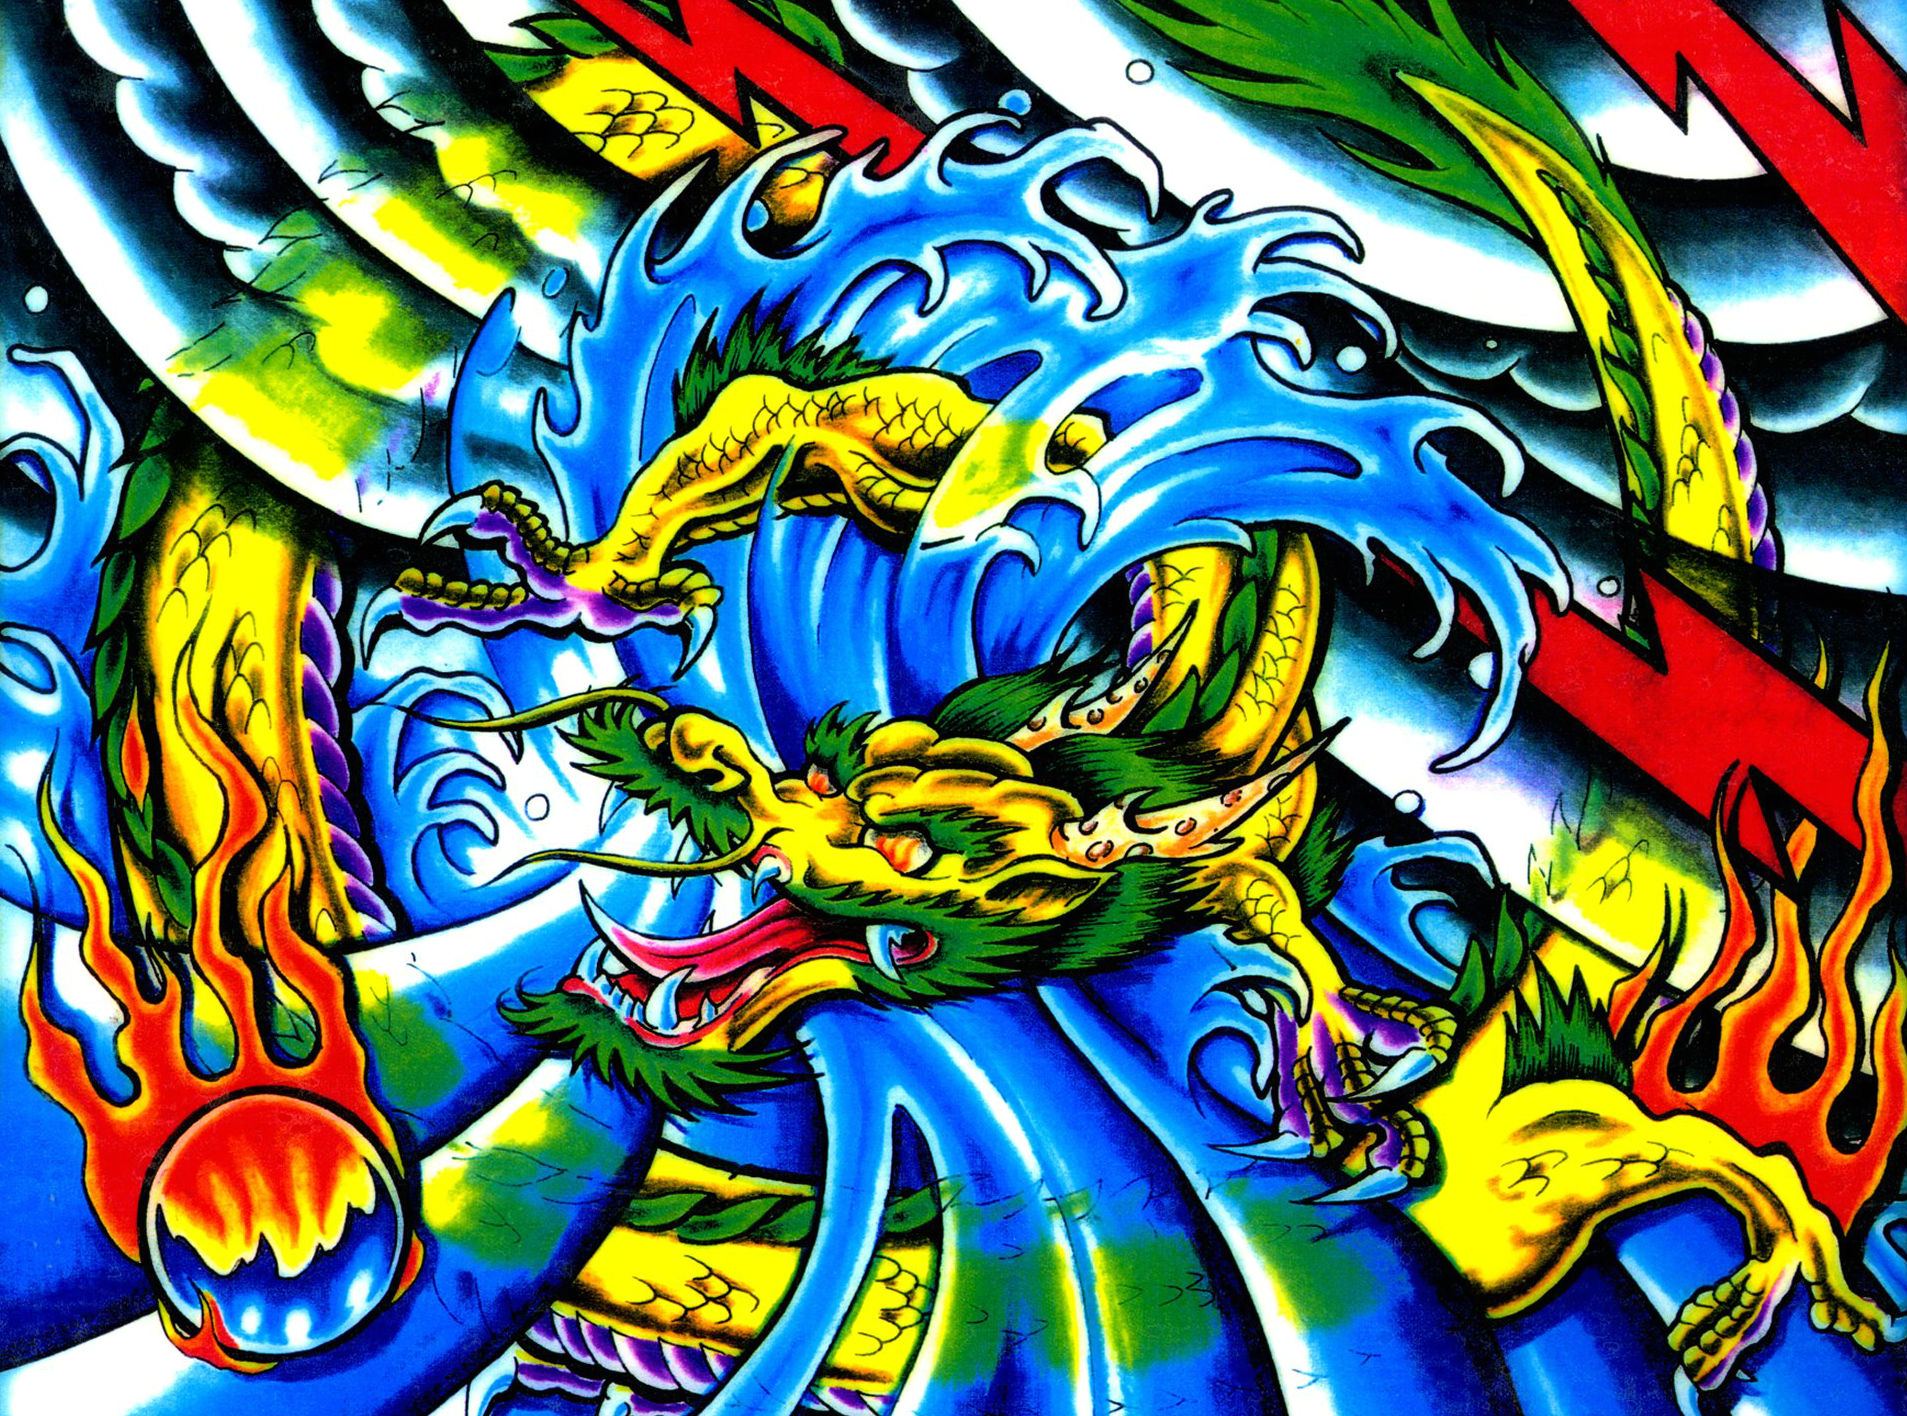 Dragon Wallpaper and Background Image | 1907x1416 | ID:301850 - 1907 x 1416 jpeg 892kB